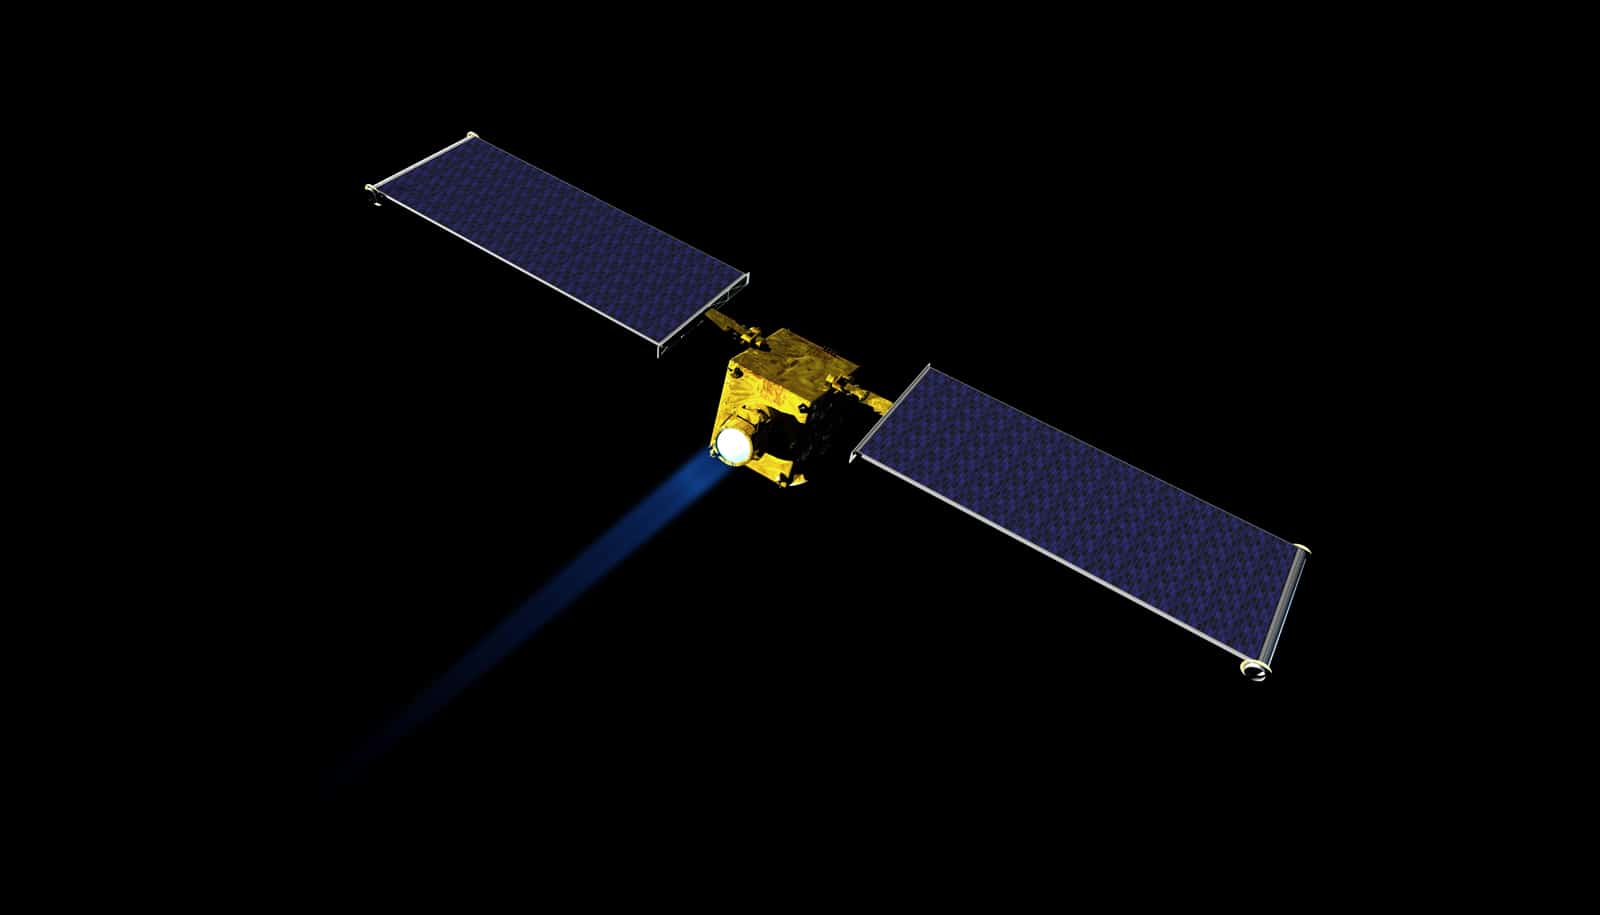 NASA's double asteroid redirection test spacecraft